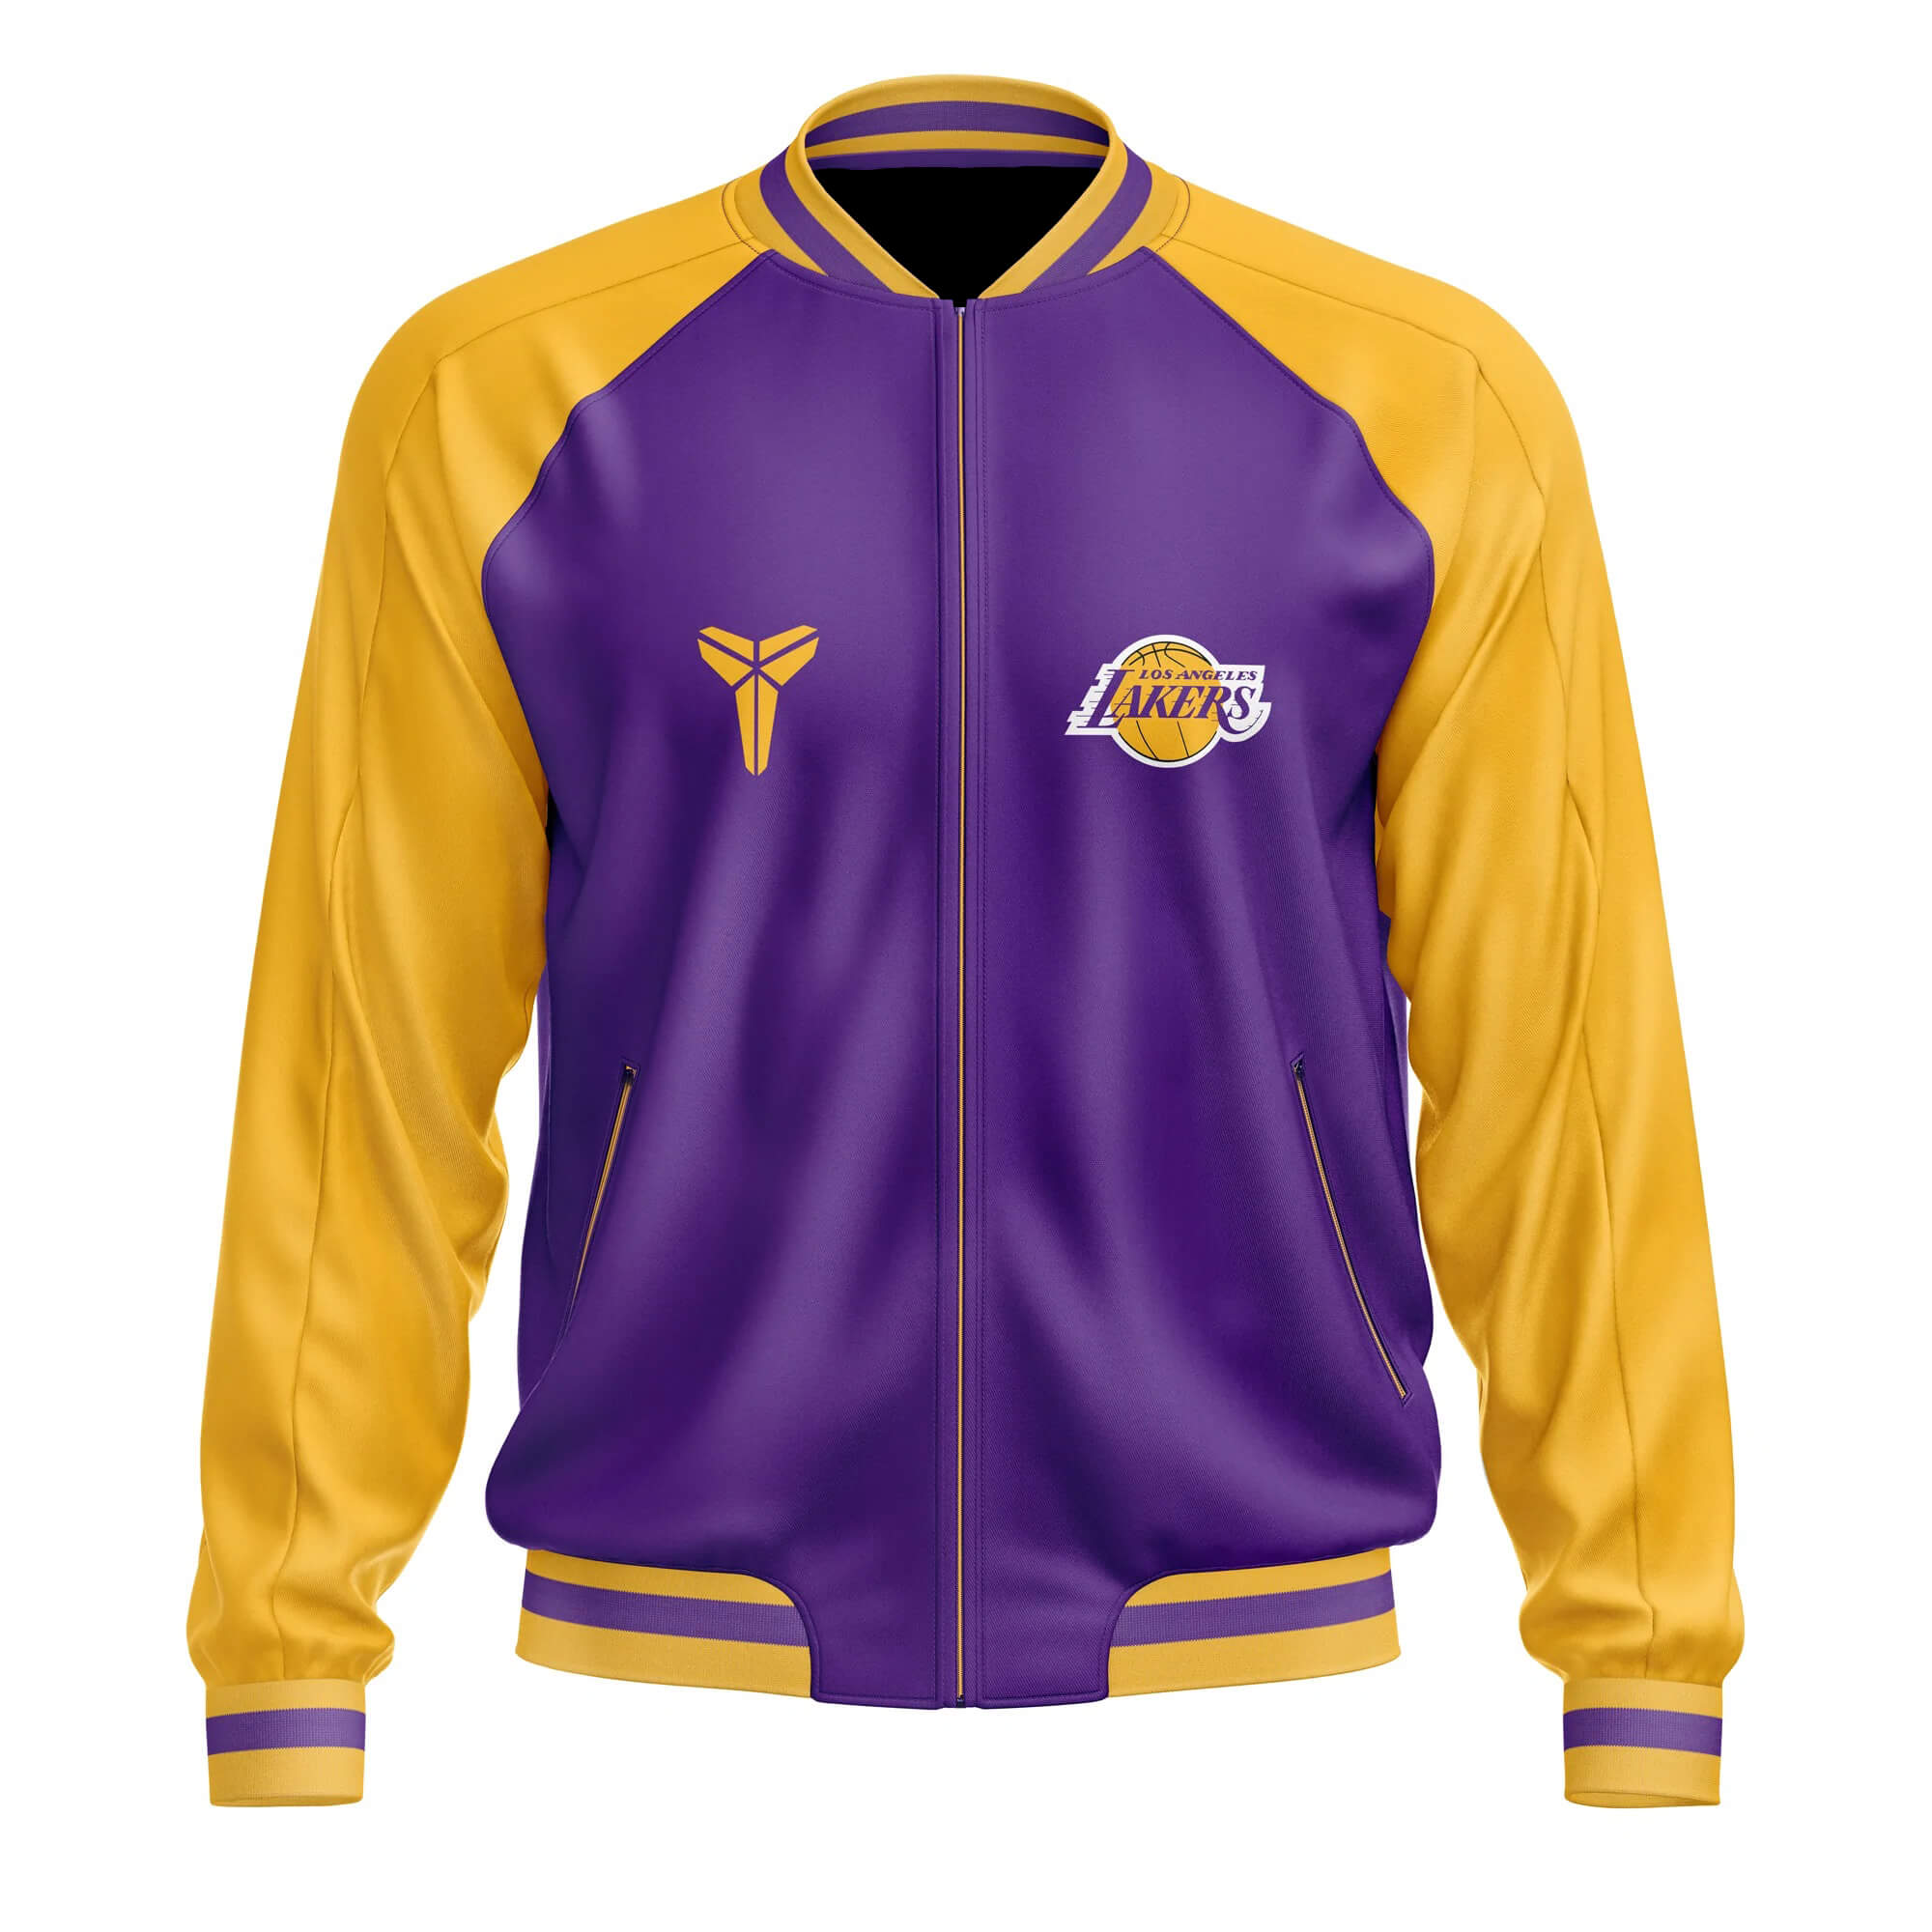 Maker of Jacket Bomber Jackets Kobe Bryant Los Angeles Lakers Leather